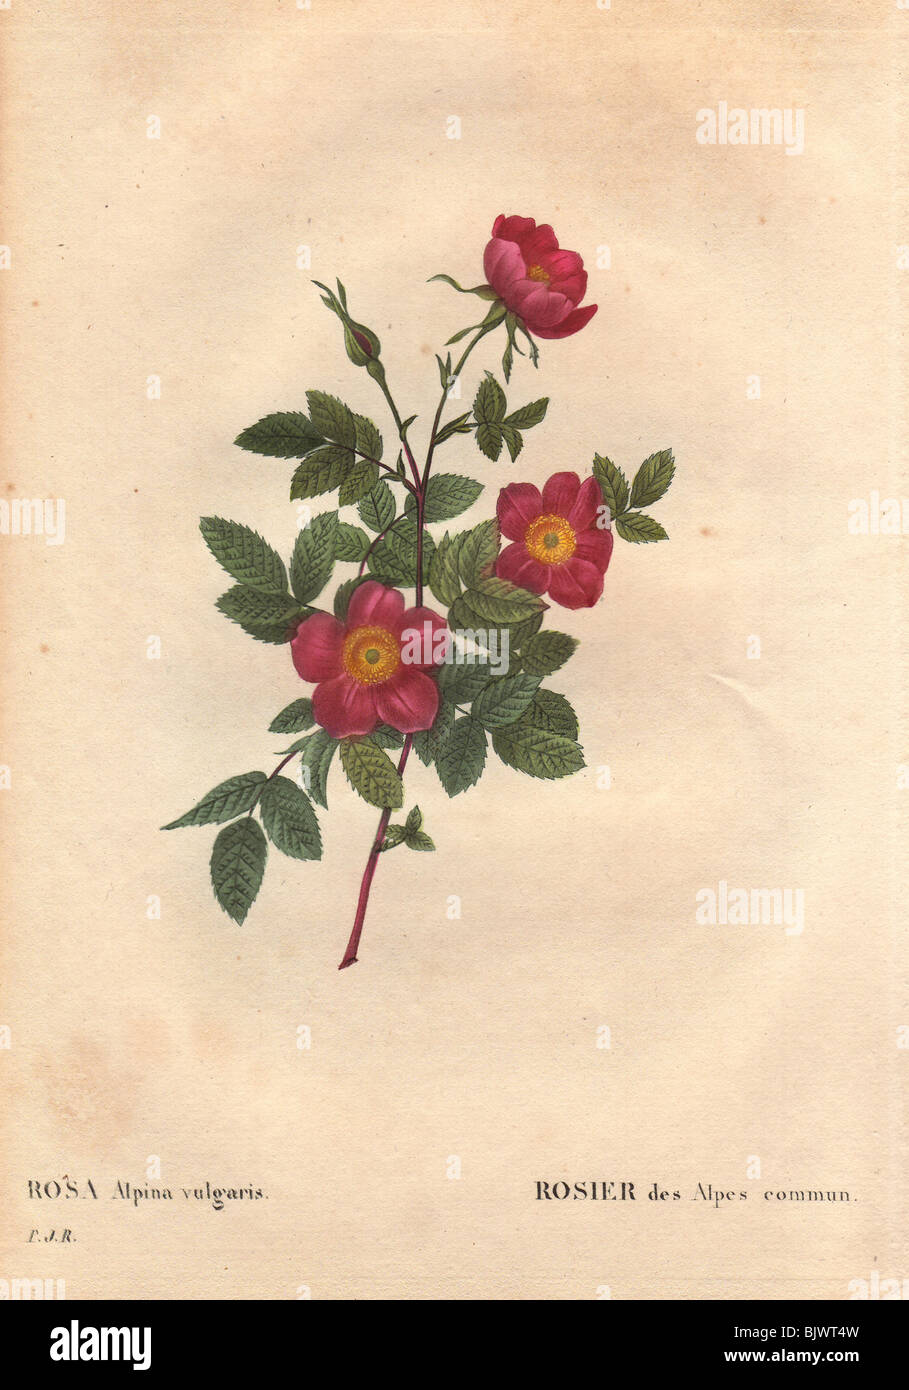 Common alpine rose with crimson flowers (Rosa alpina vulgaris). Stock Photo